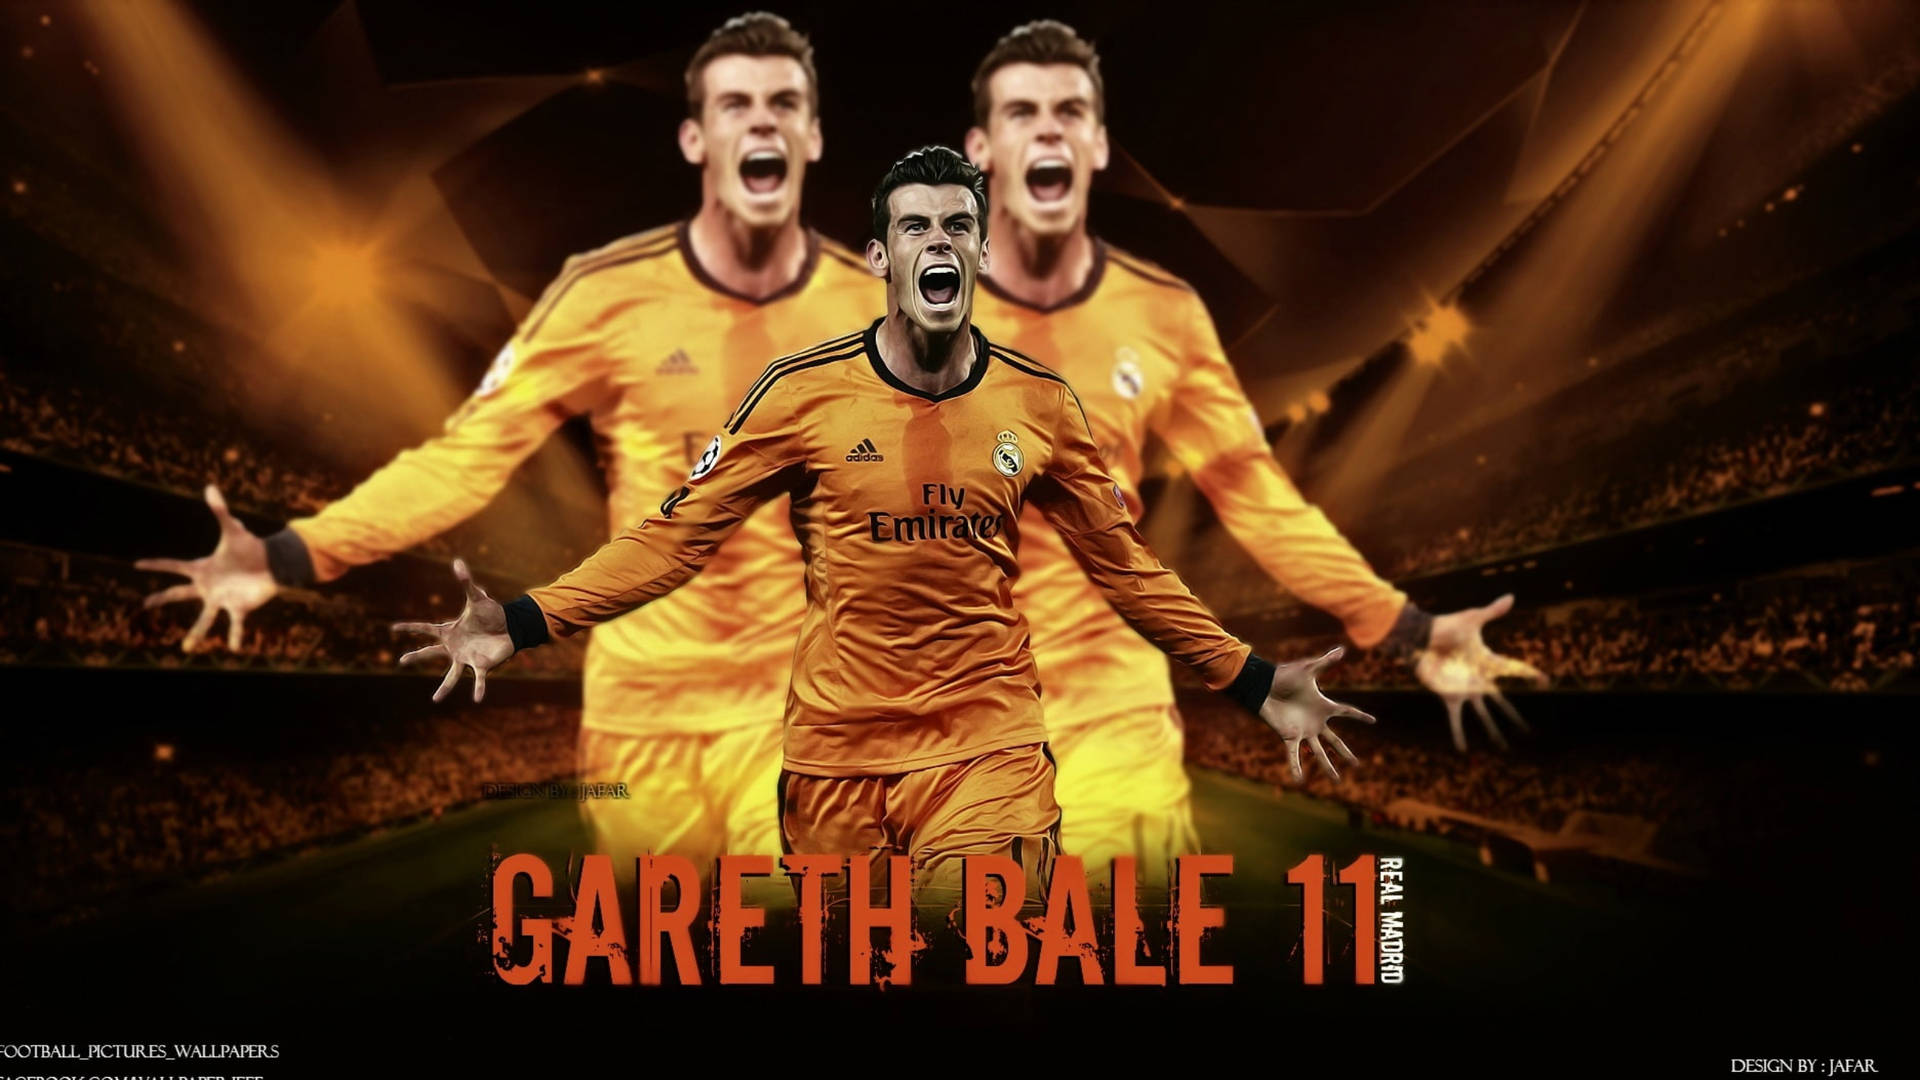 Gareth Bale 11 Digital Poster Background